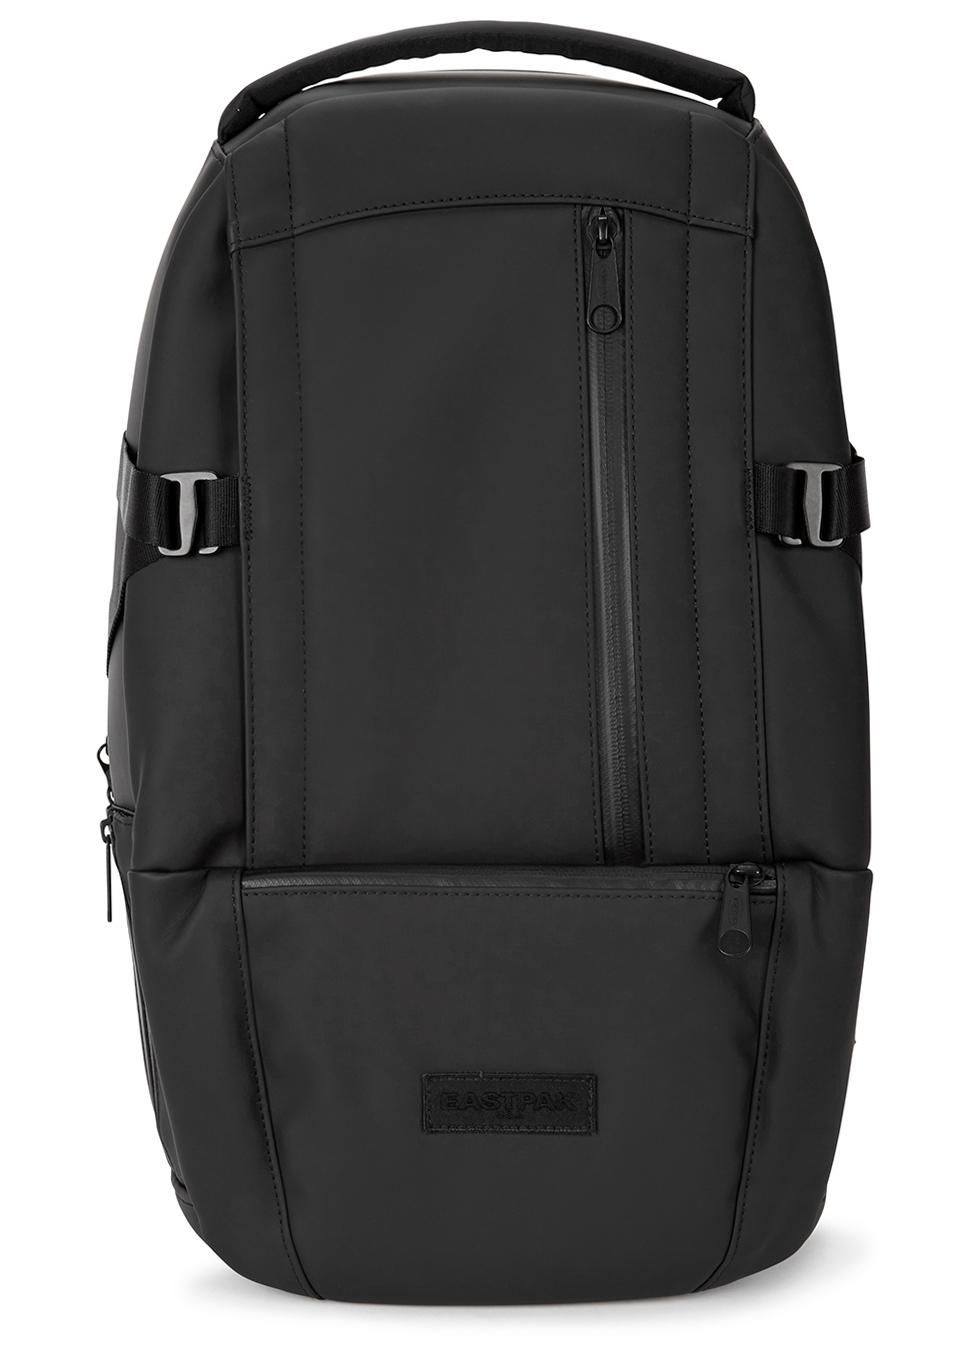 Lyst - Eastpak Floid Steelth Black Faux Leather Backpack in Black for Men